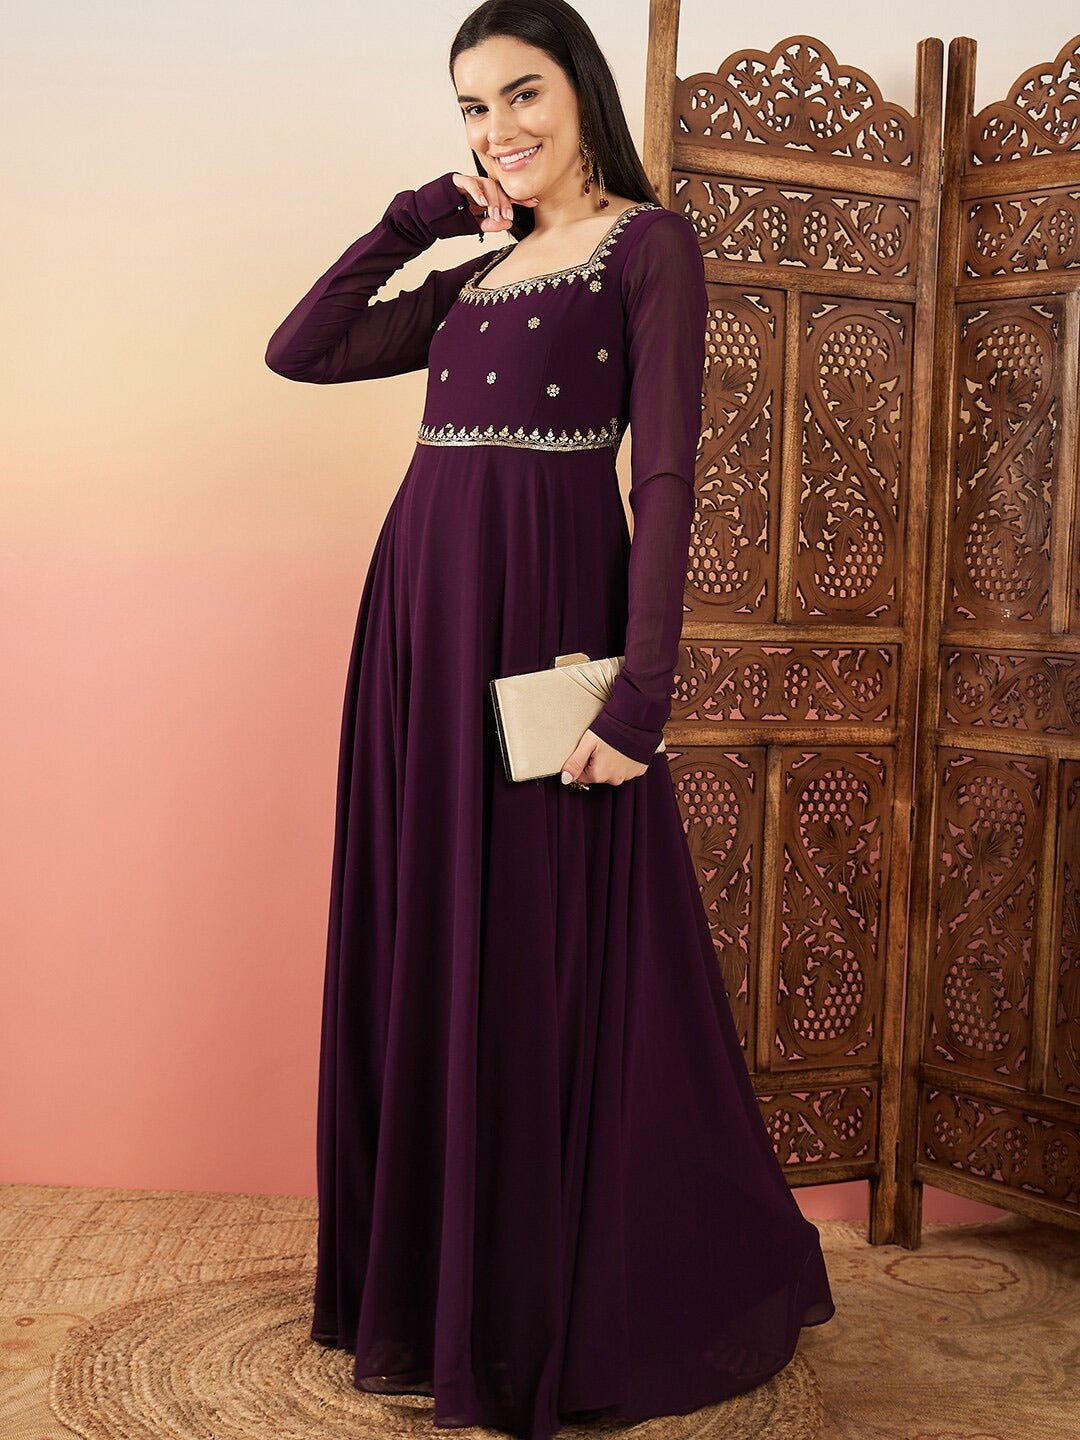 Dazzling Dark Purple Art Silk Dress with Exquisite Embellishments LSTV124393